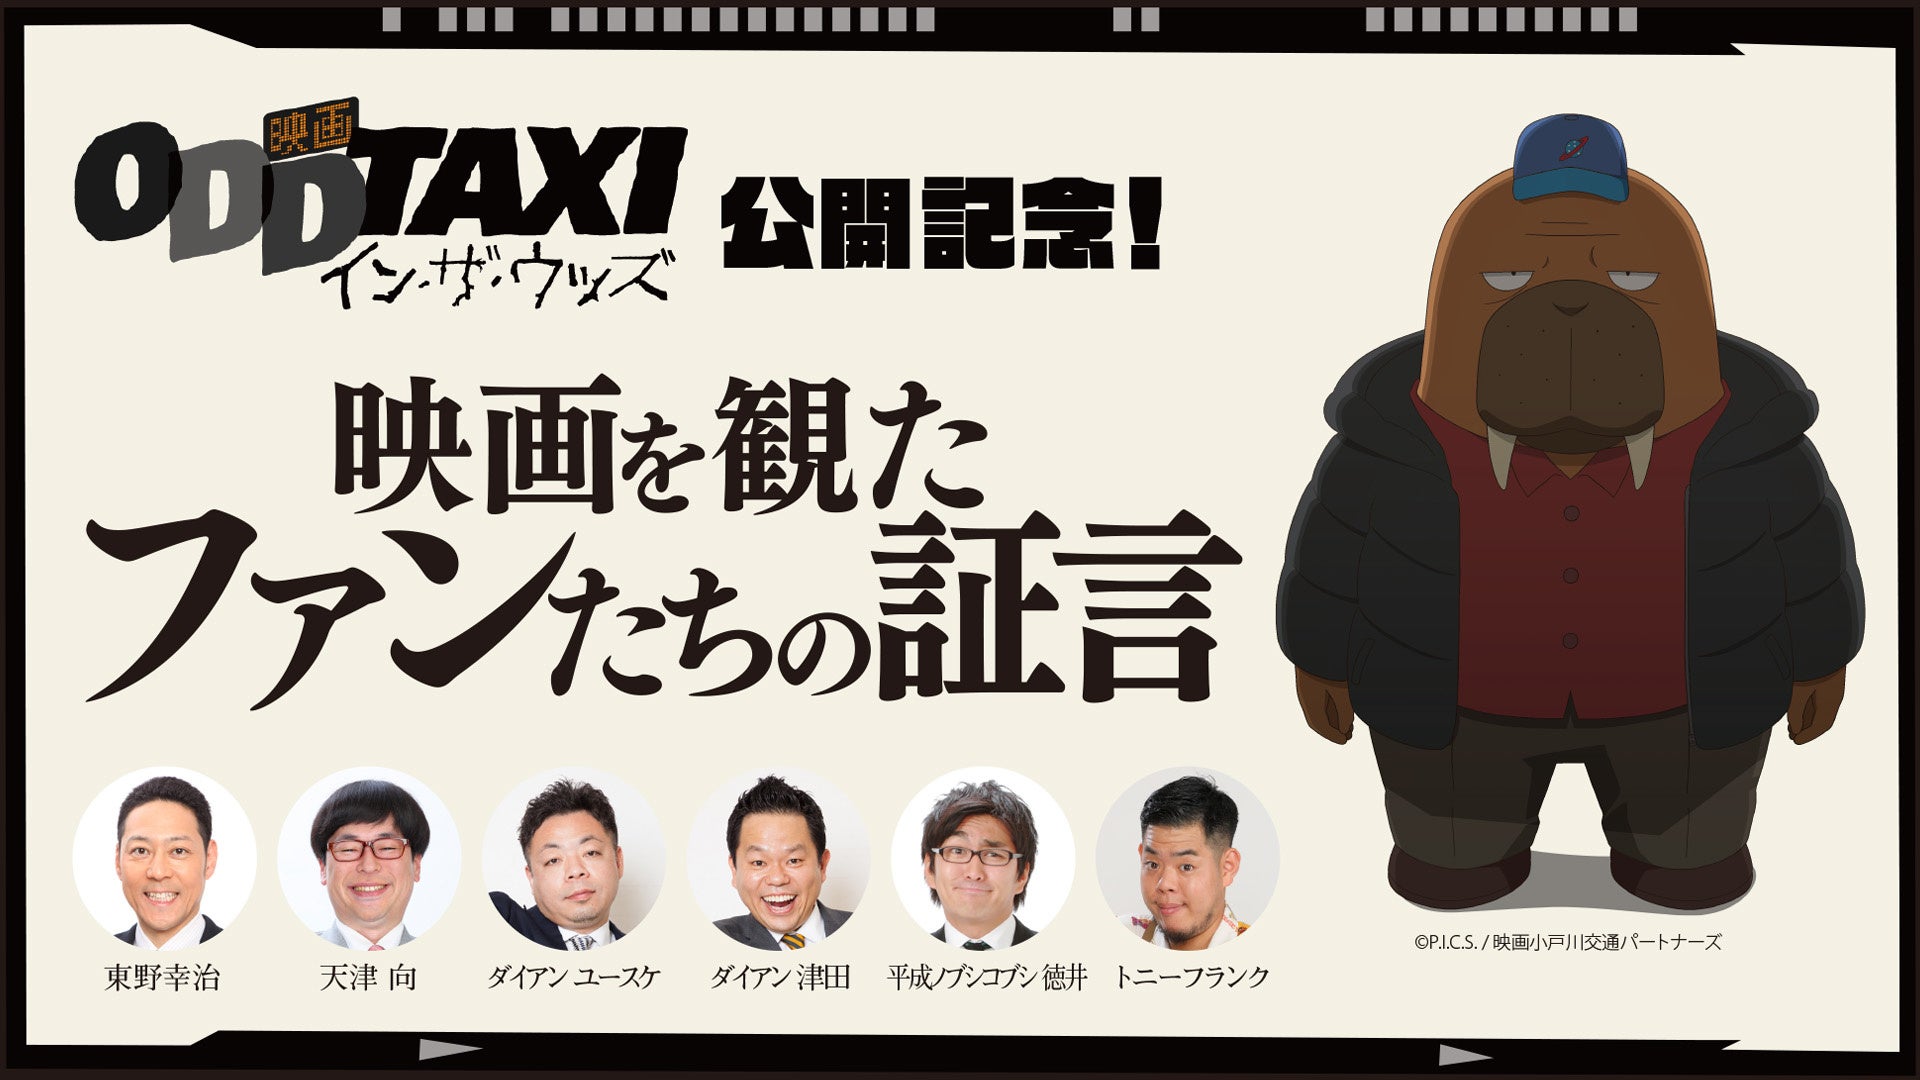 TVアニメ『黒子のバスケ』10周年記念「黒子のバスケ×マリオンクレープ」コラボが開催決定！